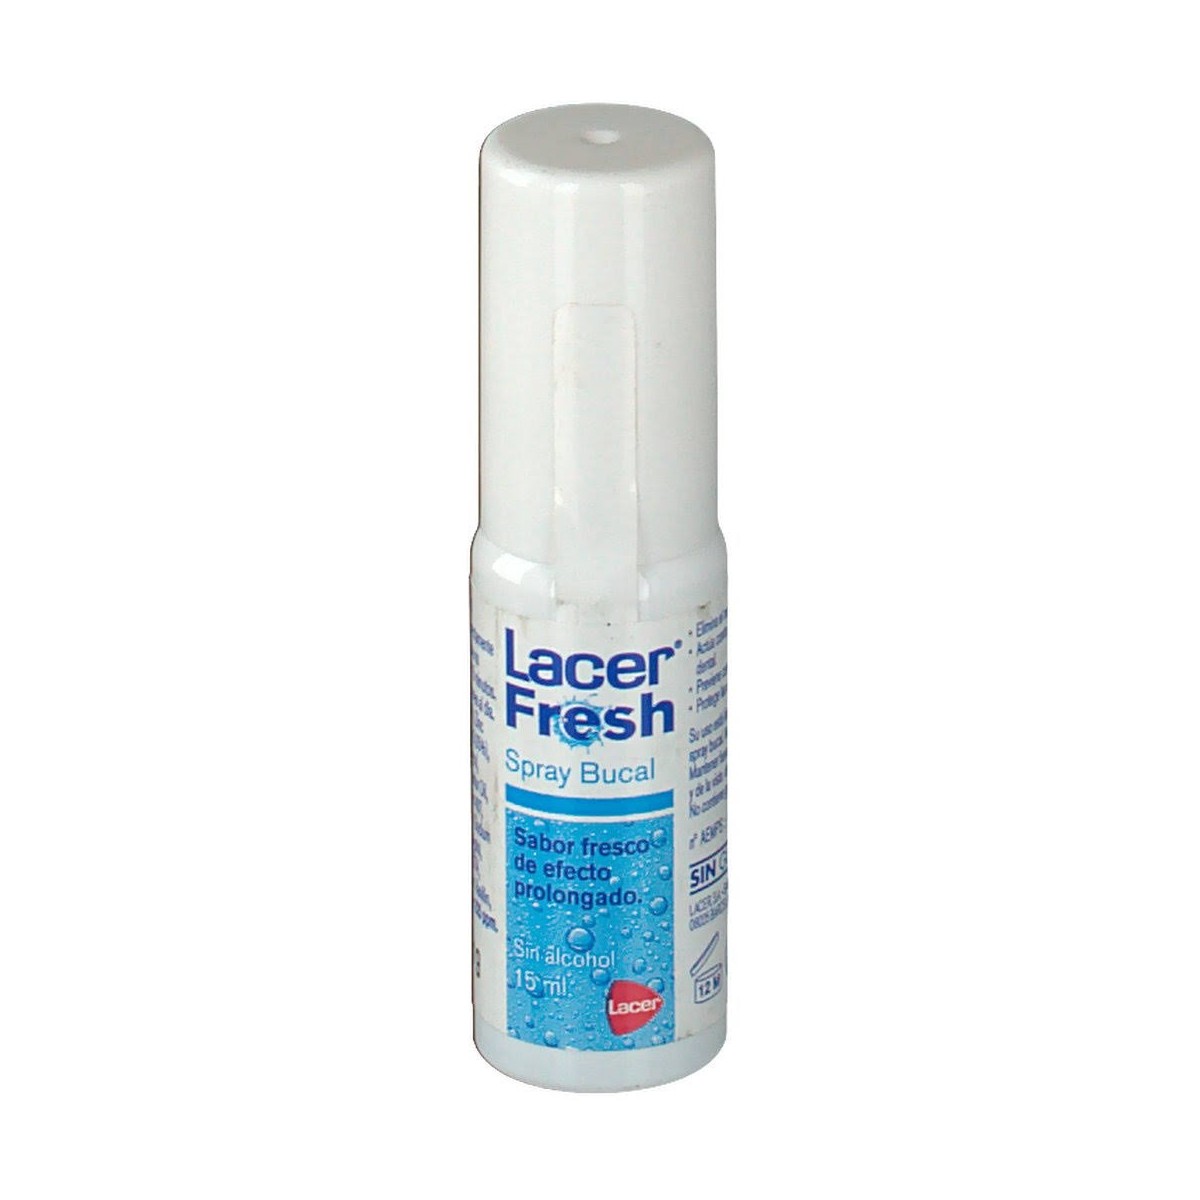 lacer-spray-15-ml-fresh